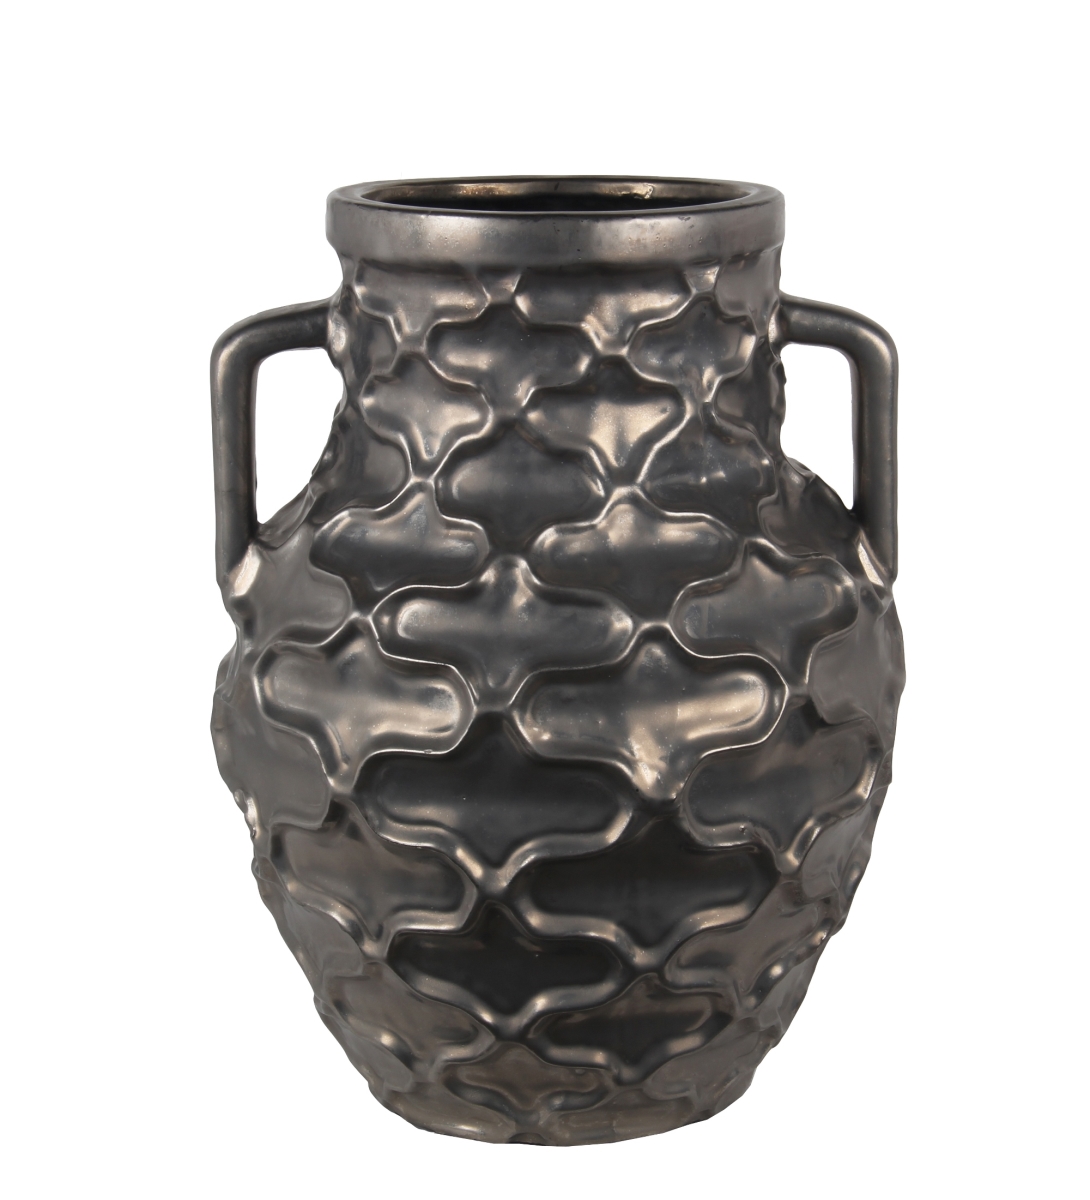 20278 Contemporary Ceramic Vase, Silver - Large